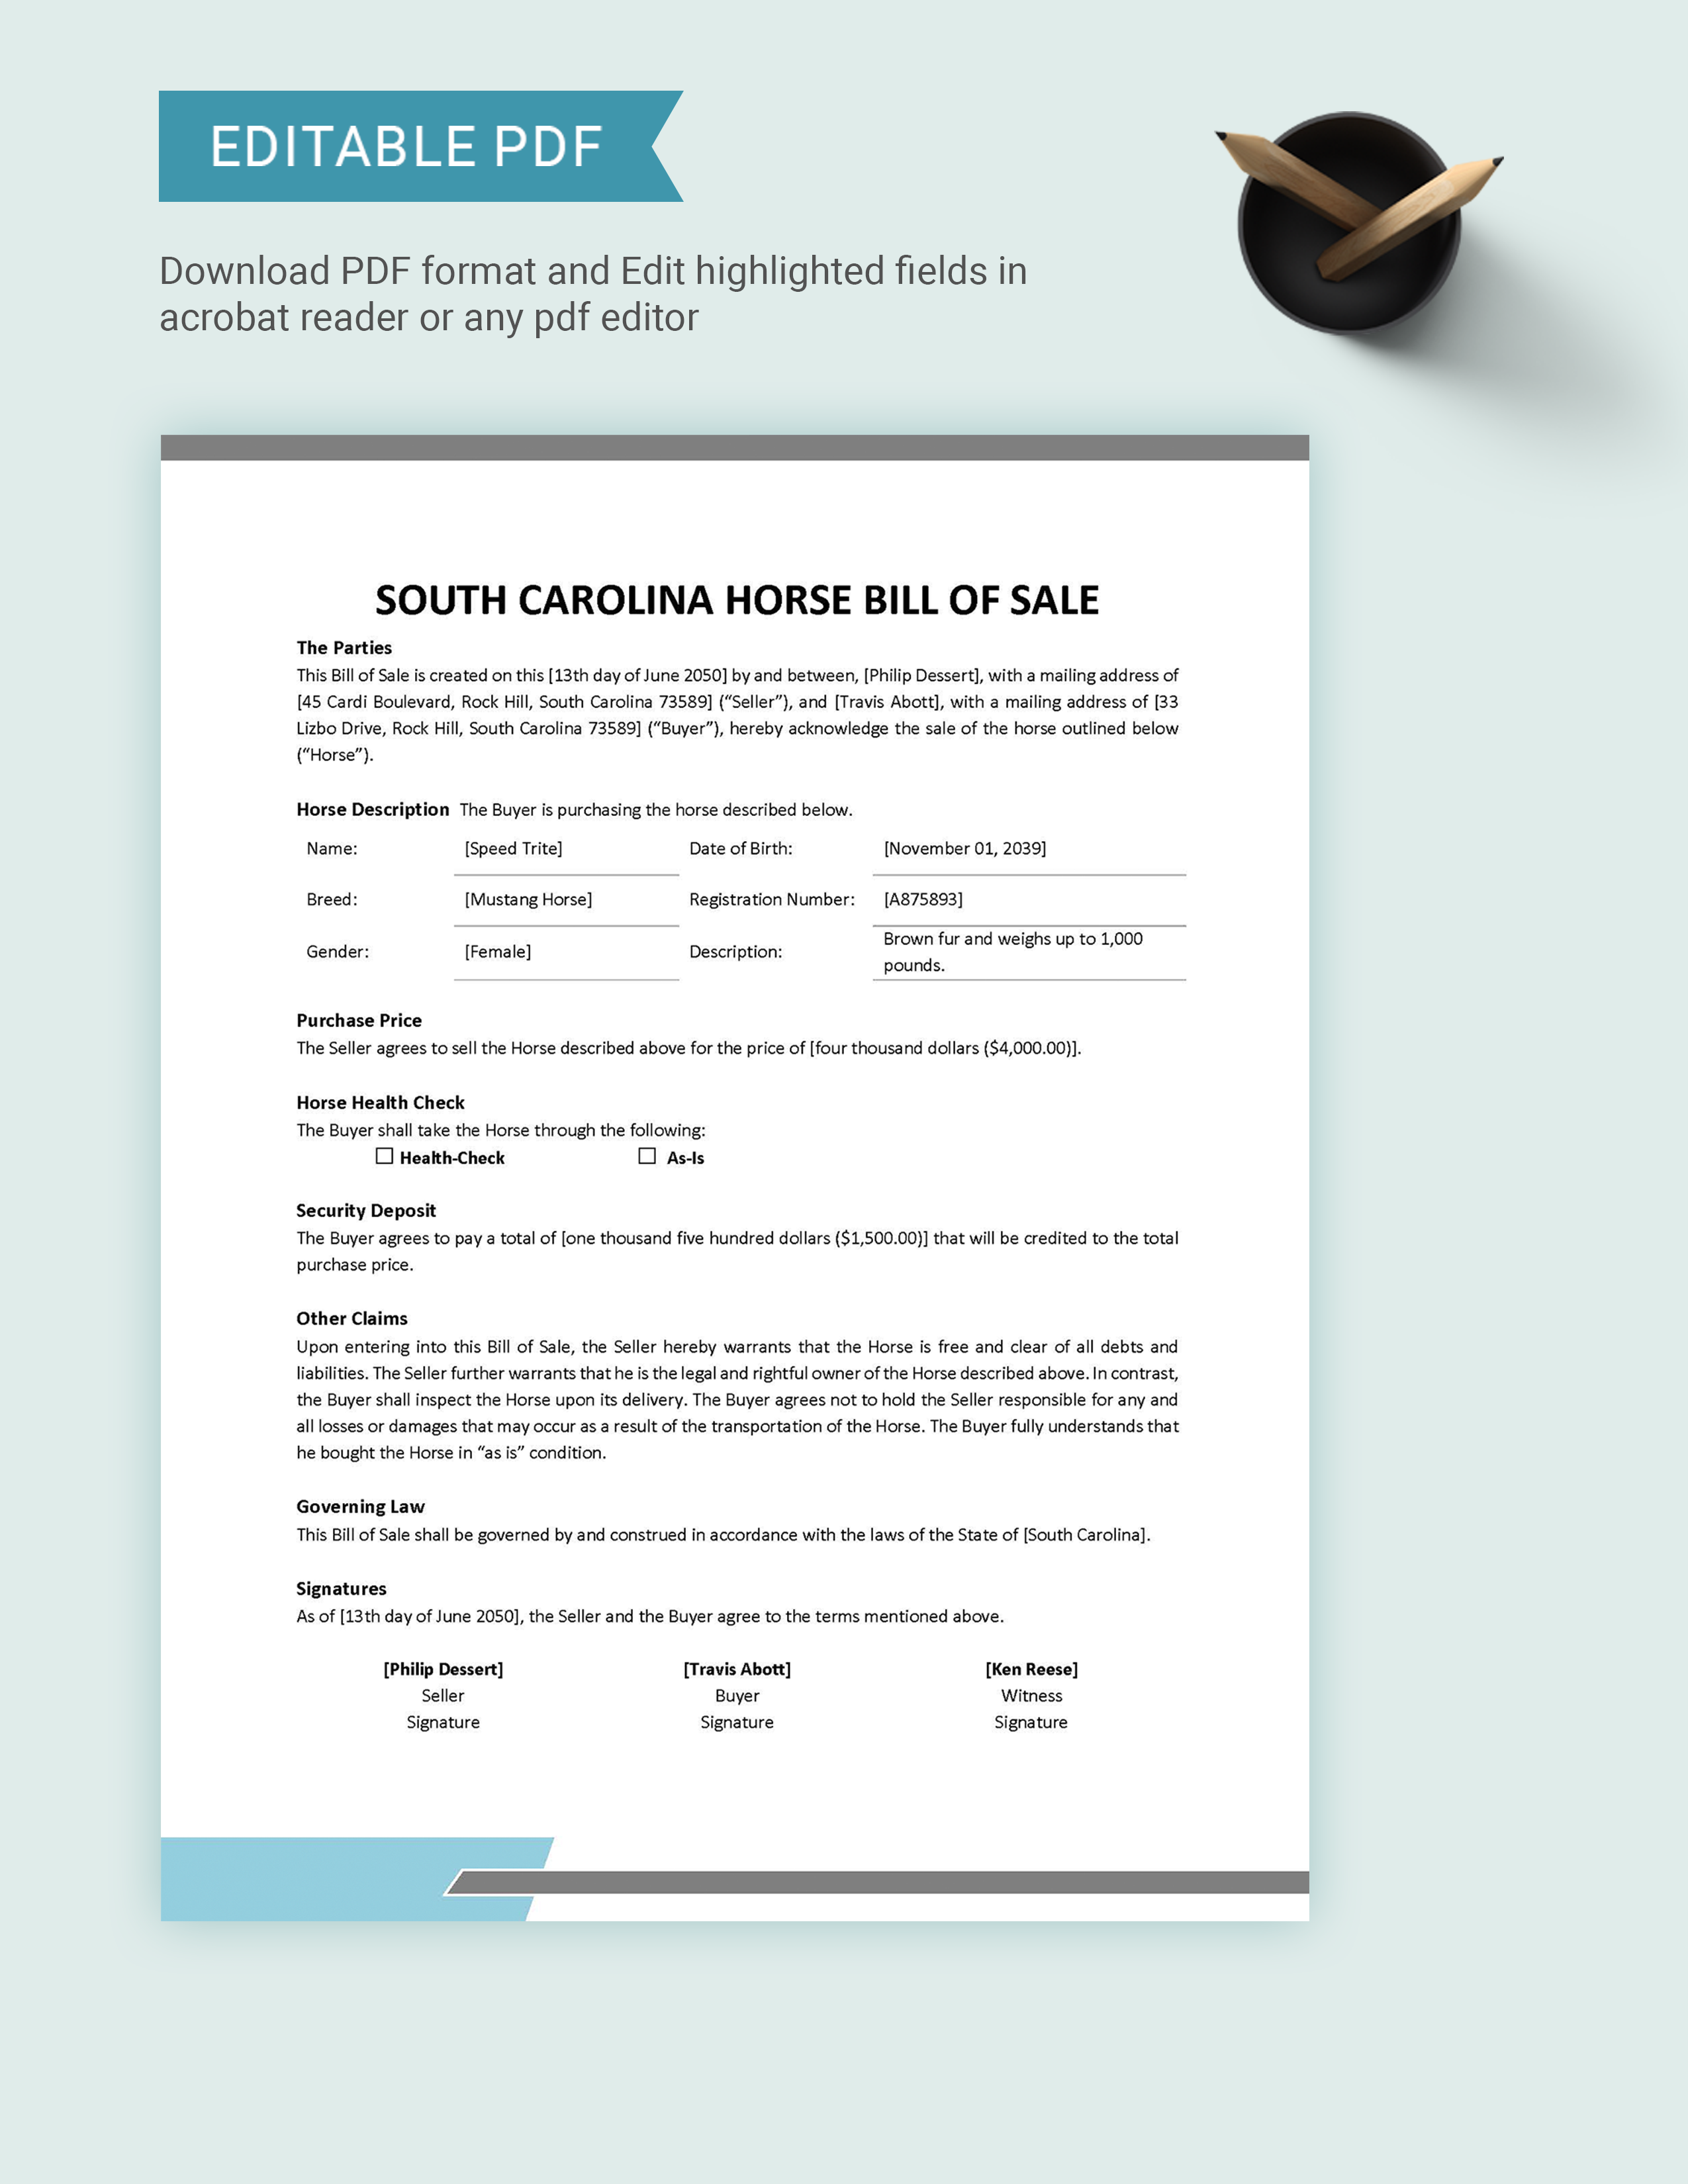 South Carolina Horse Bill of Sale Template